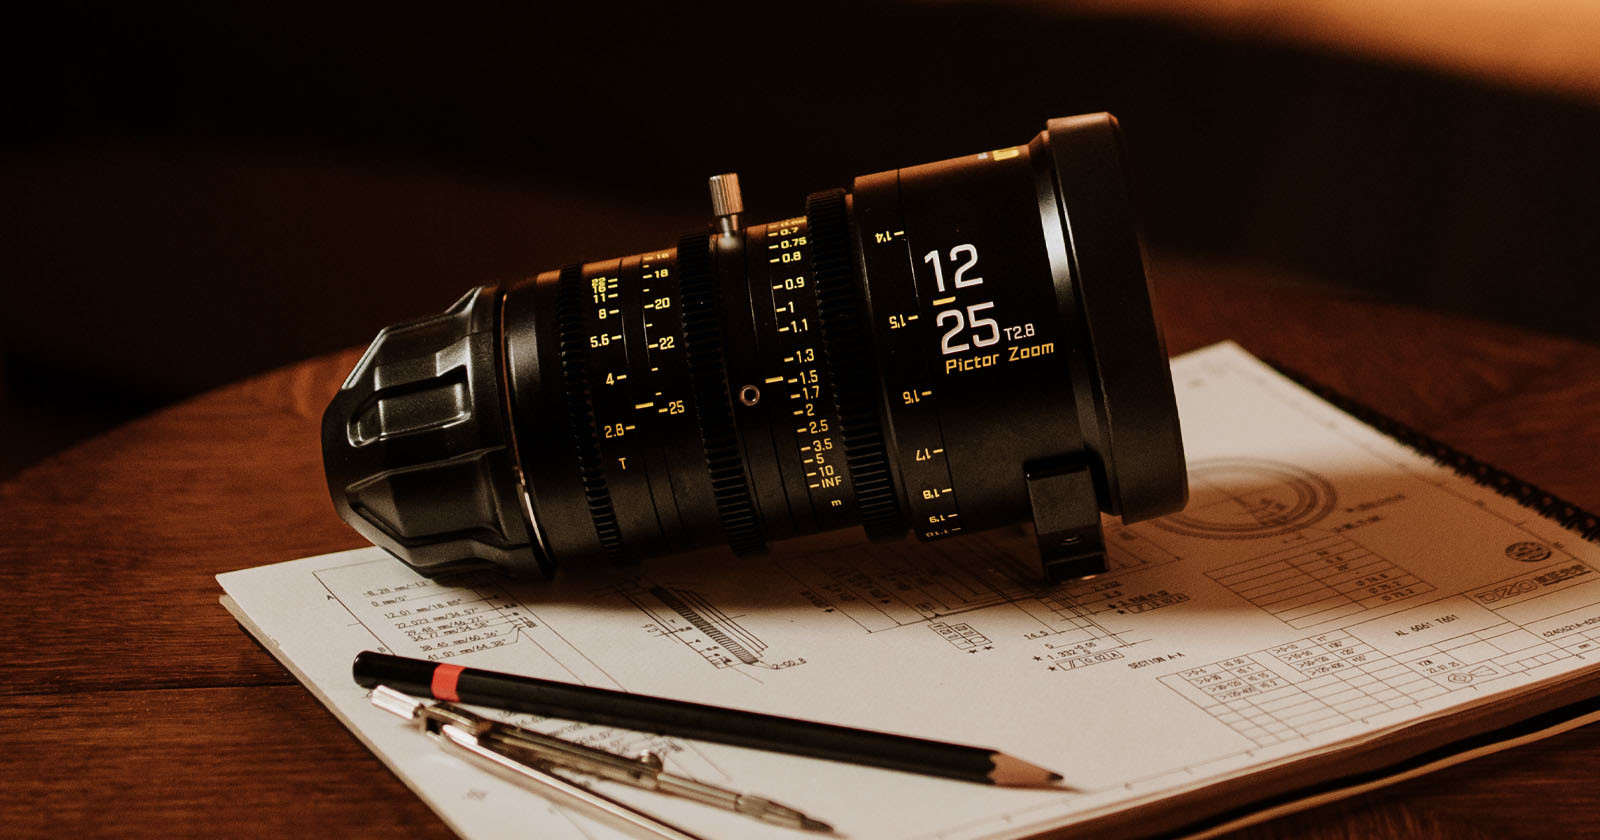  dzofilm pictor 12-25mm sub- 000 parfocal cine lens 